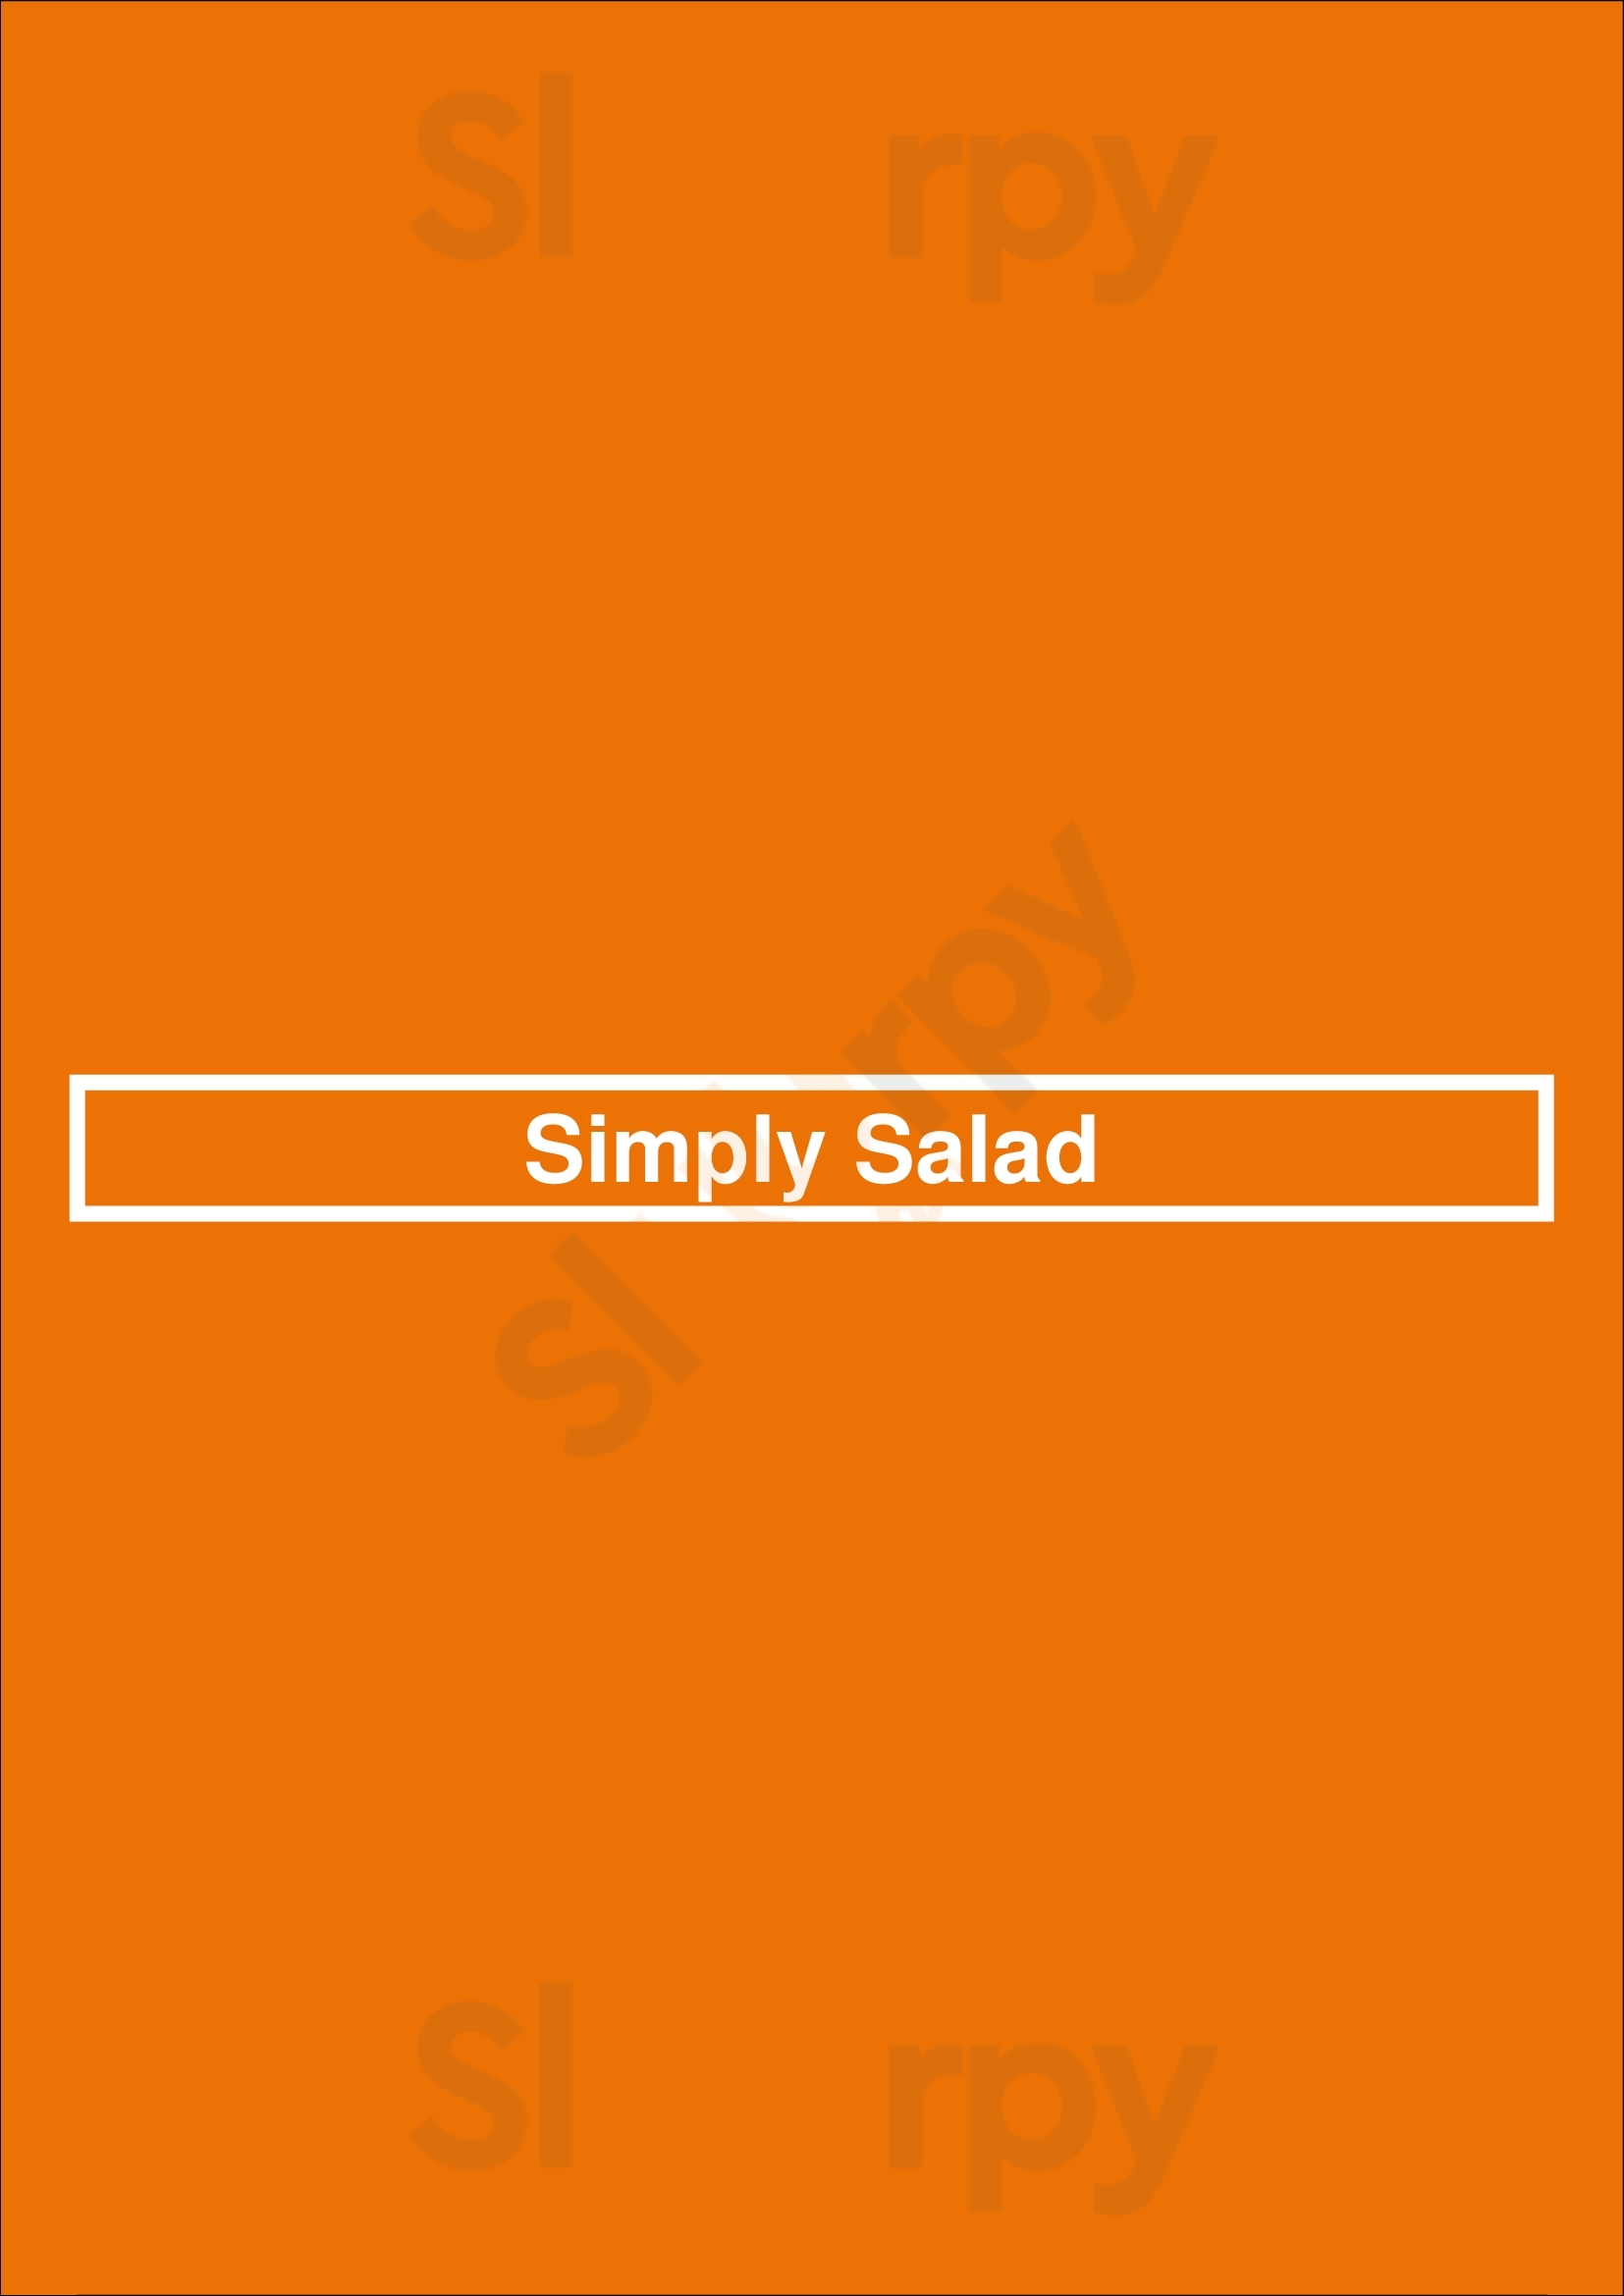 Simply Salad Los Angeles Menu - 1